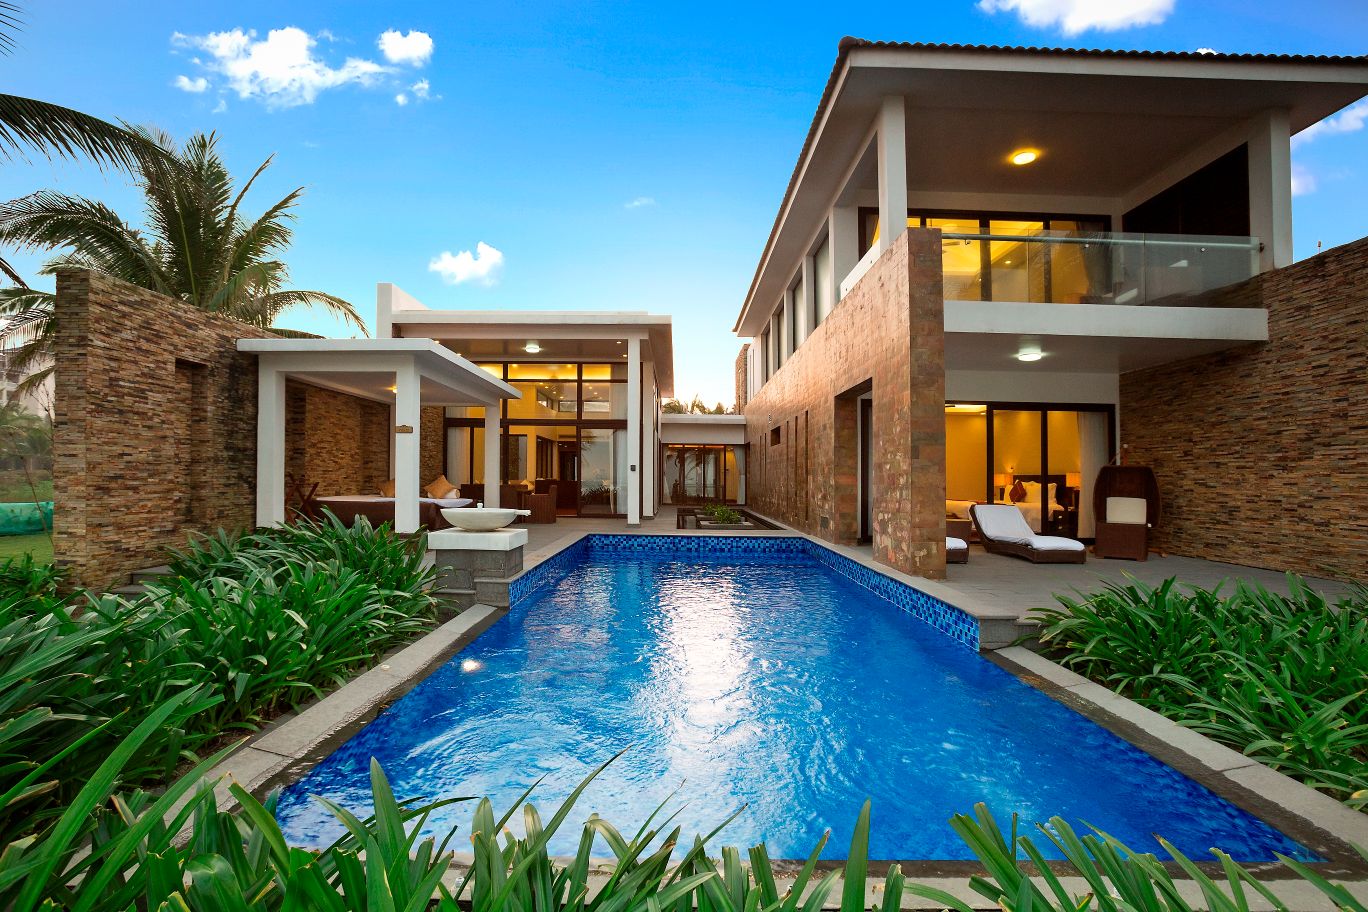 Luxurious Villas for Rent: Your Gateway to Unforgettable Getaways